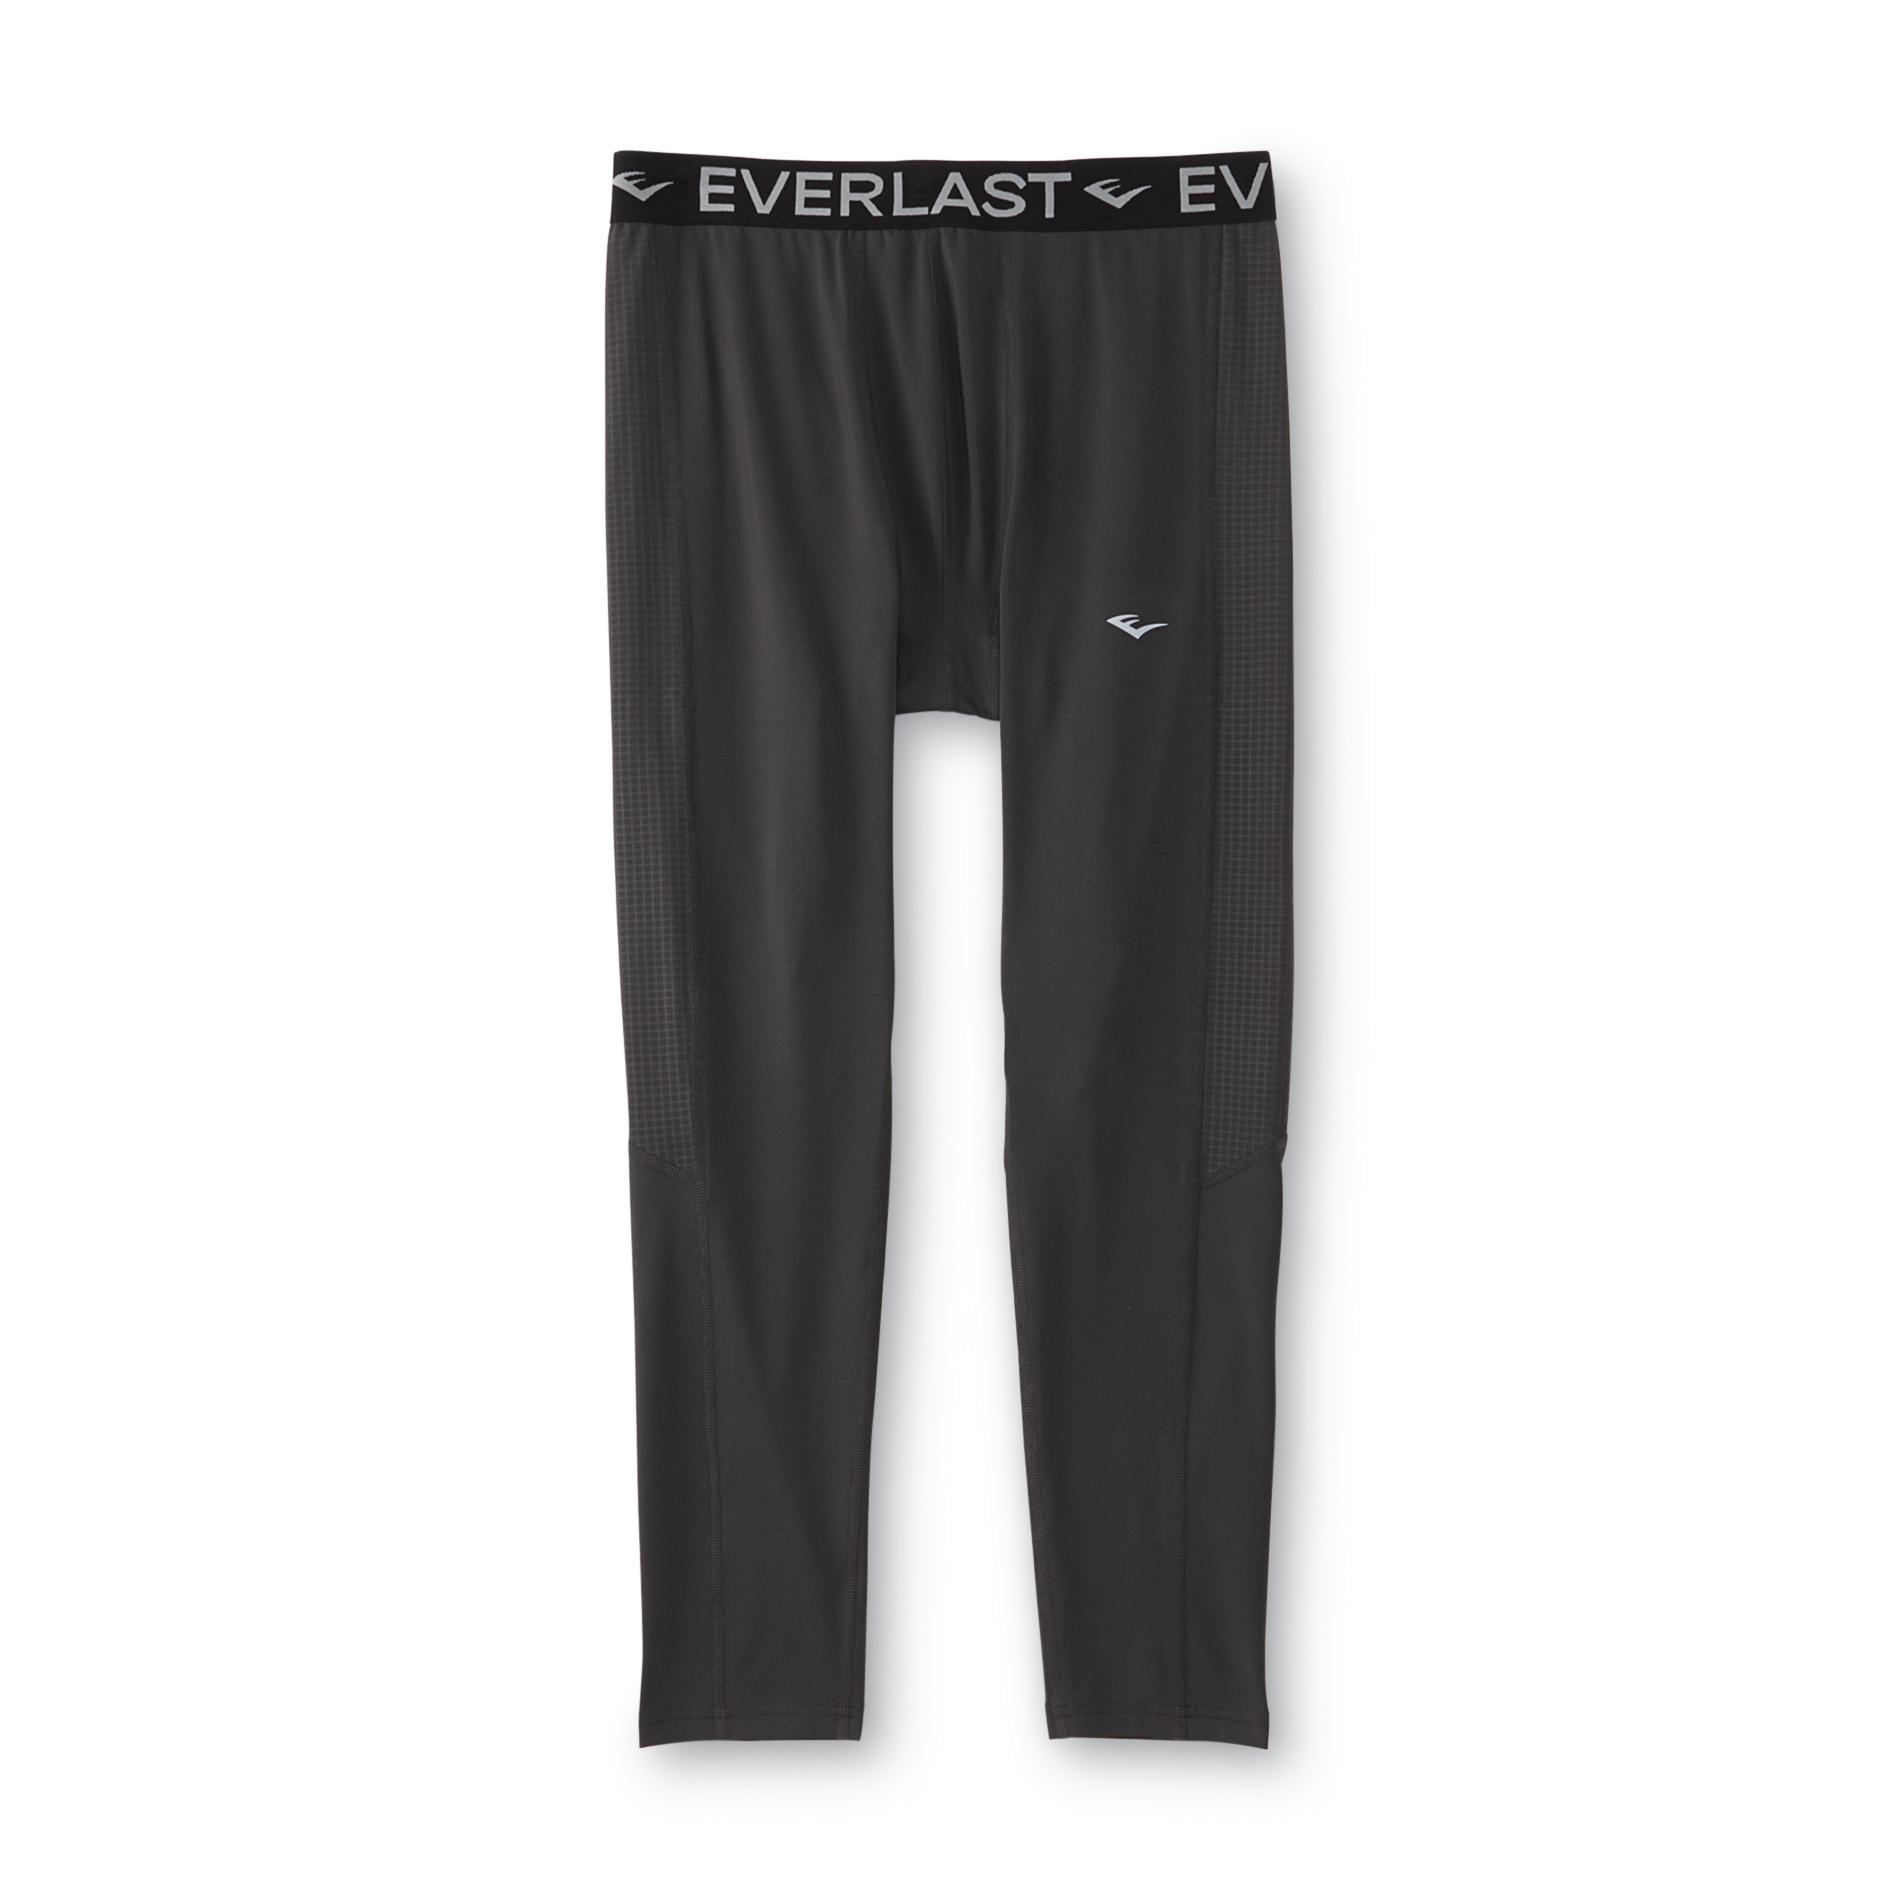 Everlast&reg; Men's Compression Athletic Pants